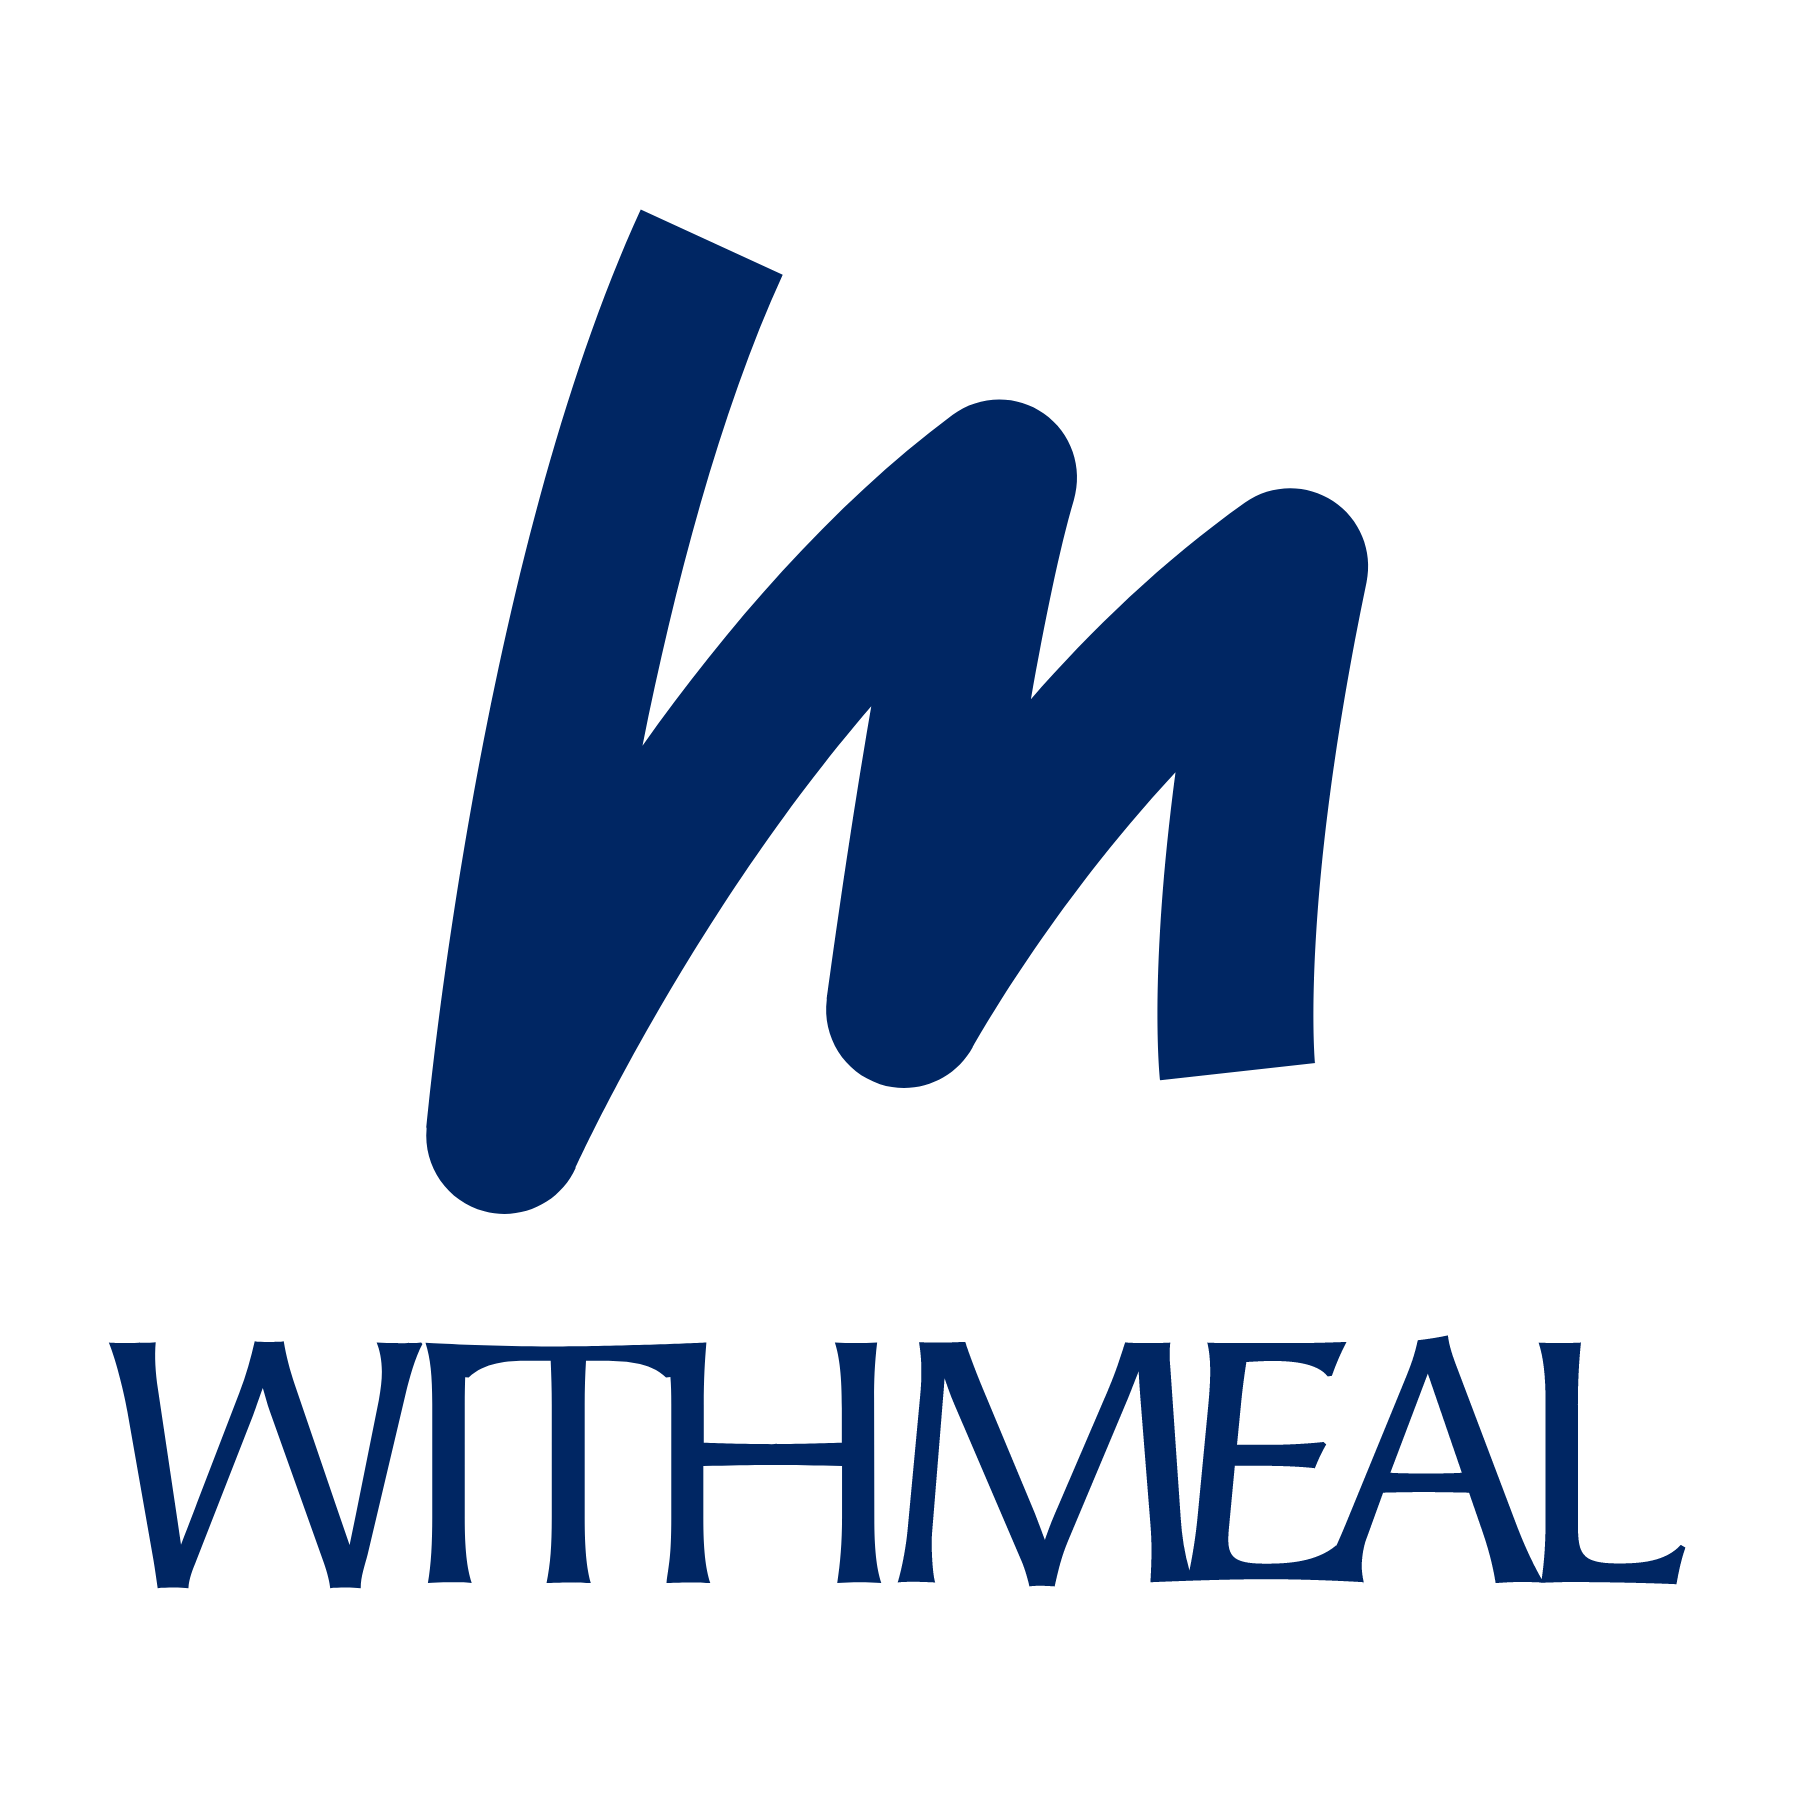 WITHMEALのオンラインショップがオープンしました。